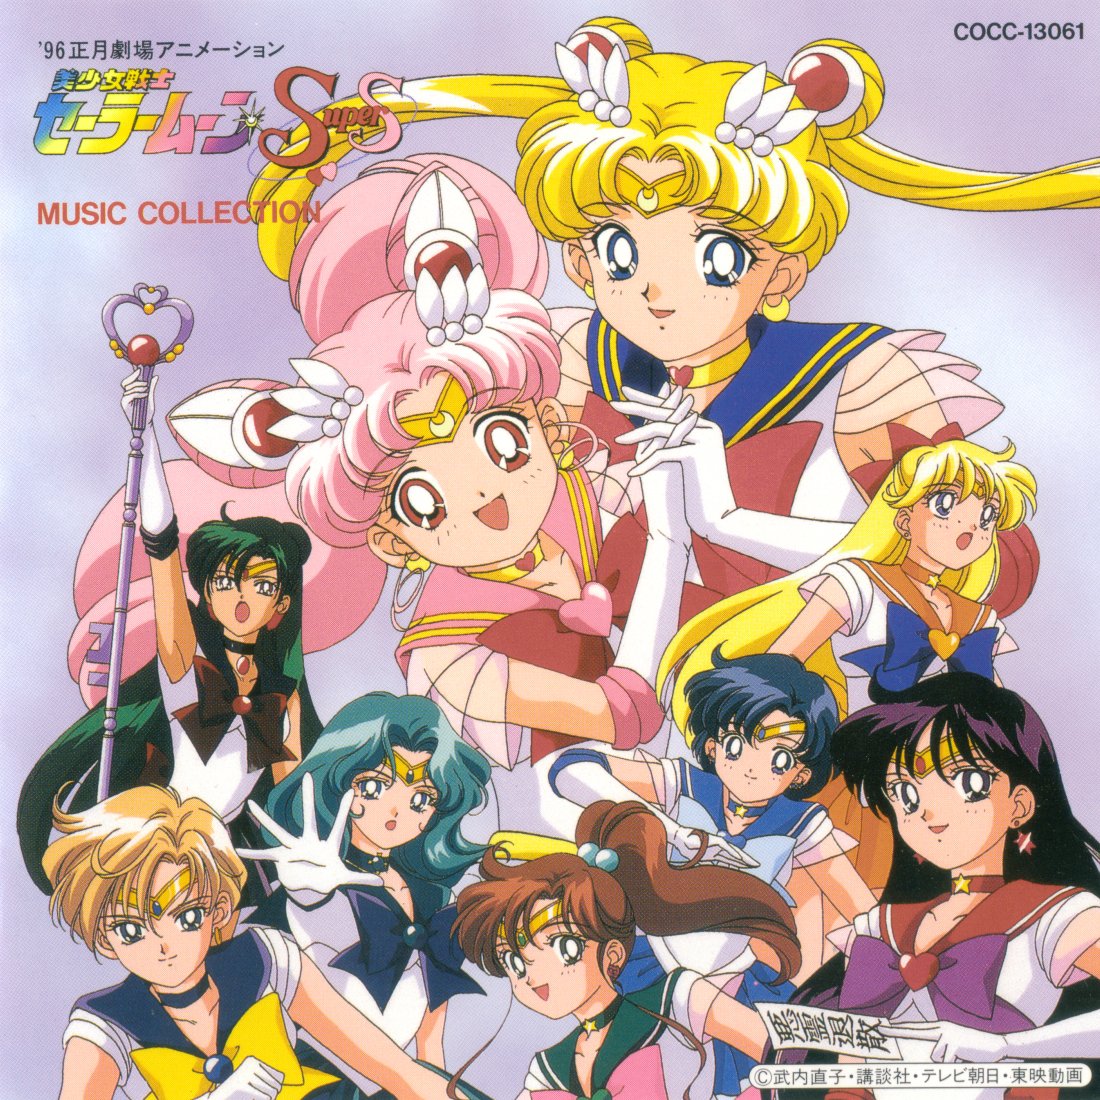 Sailor Moon S Movie  Sailor moon s, Sailor moon movie, Sailor moon